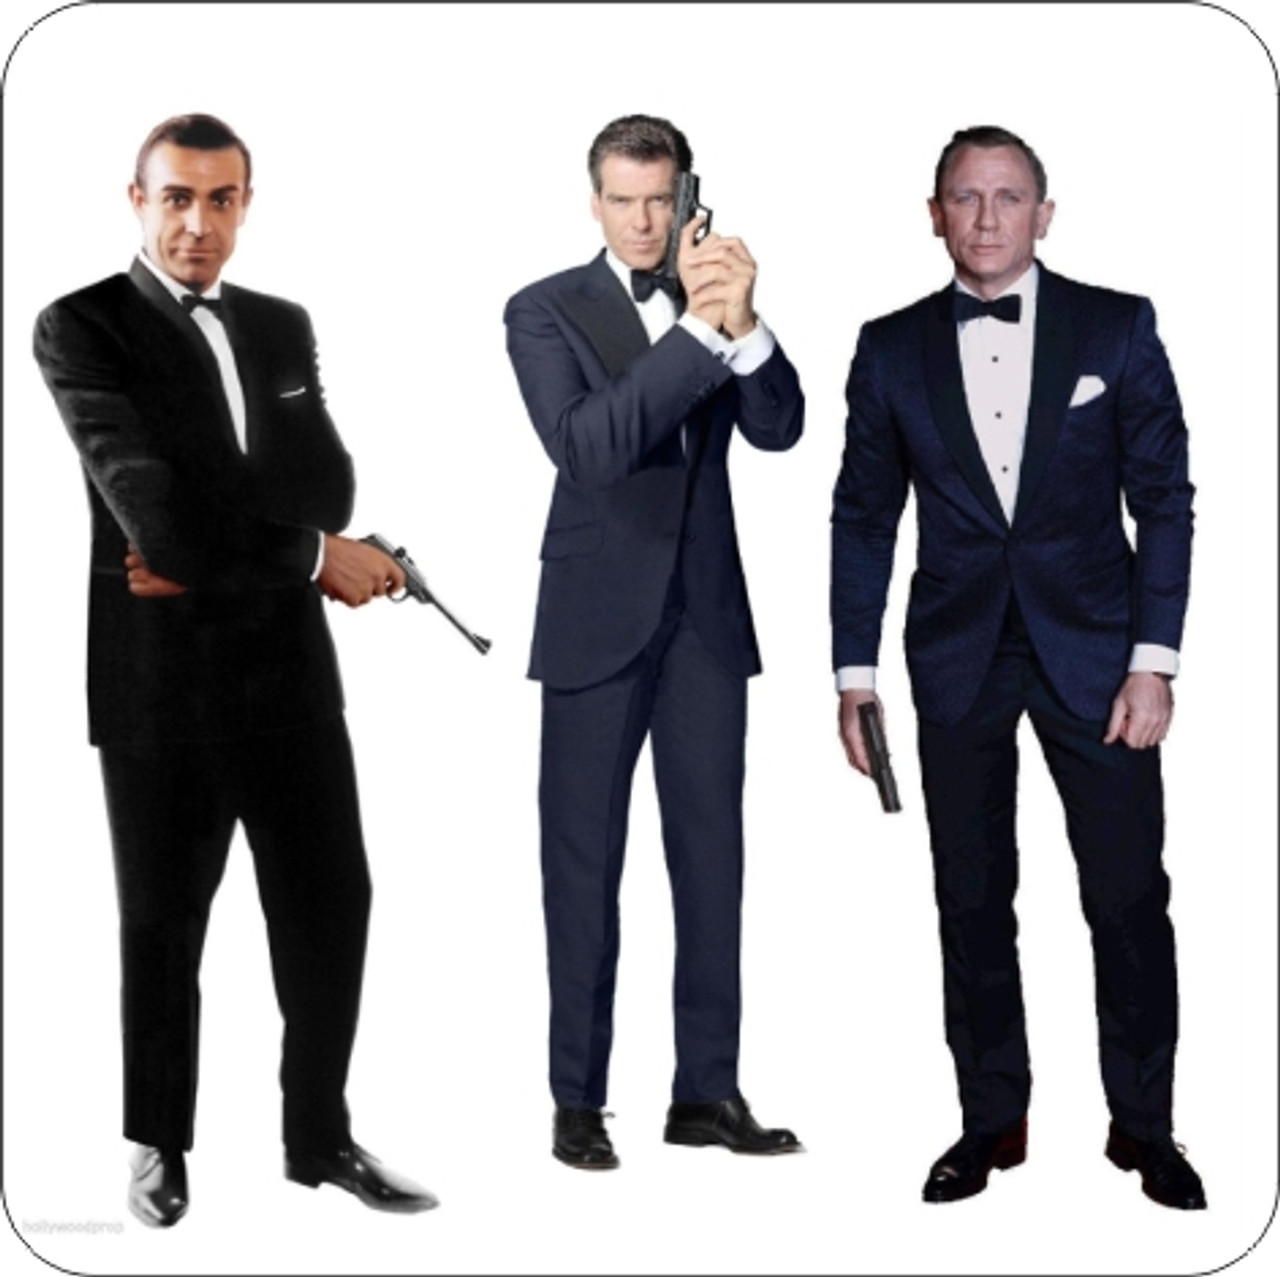 Set of 4 Coaters The Three Best James Bonds 007